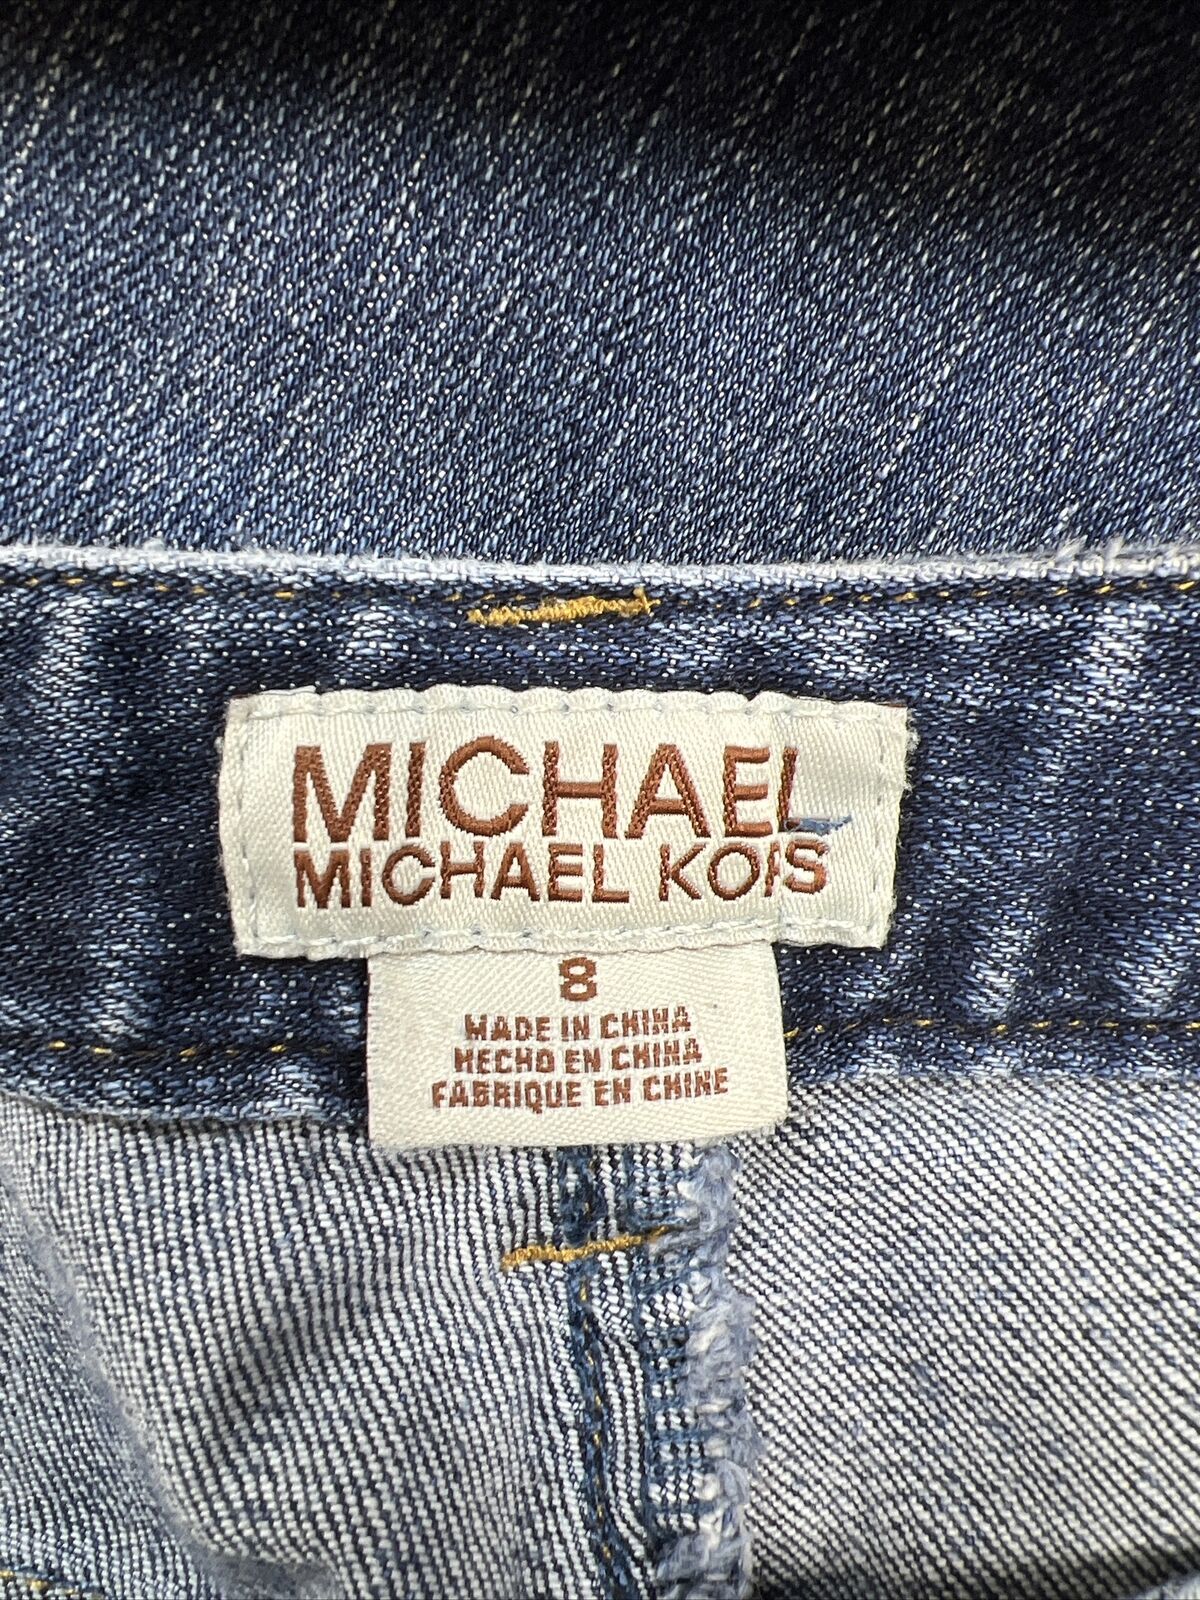 Michael Kors Women's Medium Wash Boot Cut Jeans - 8